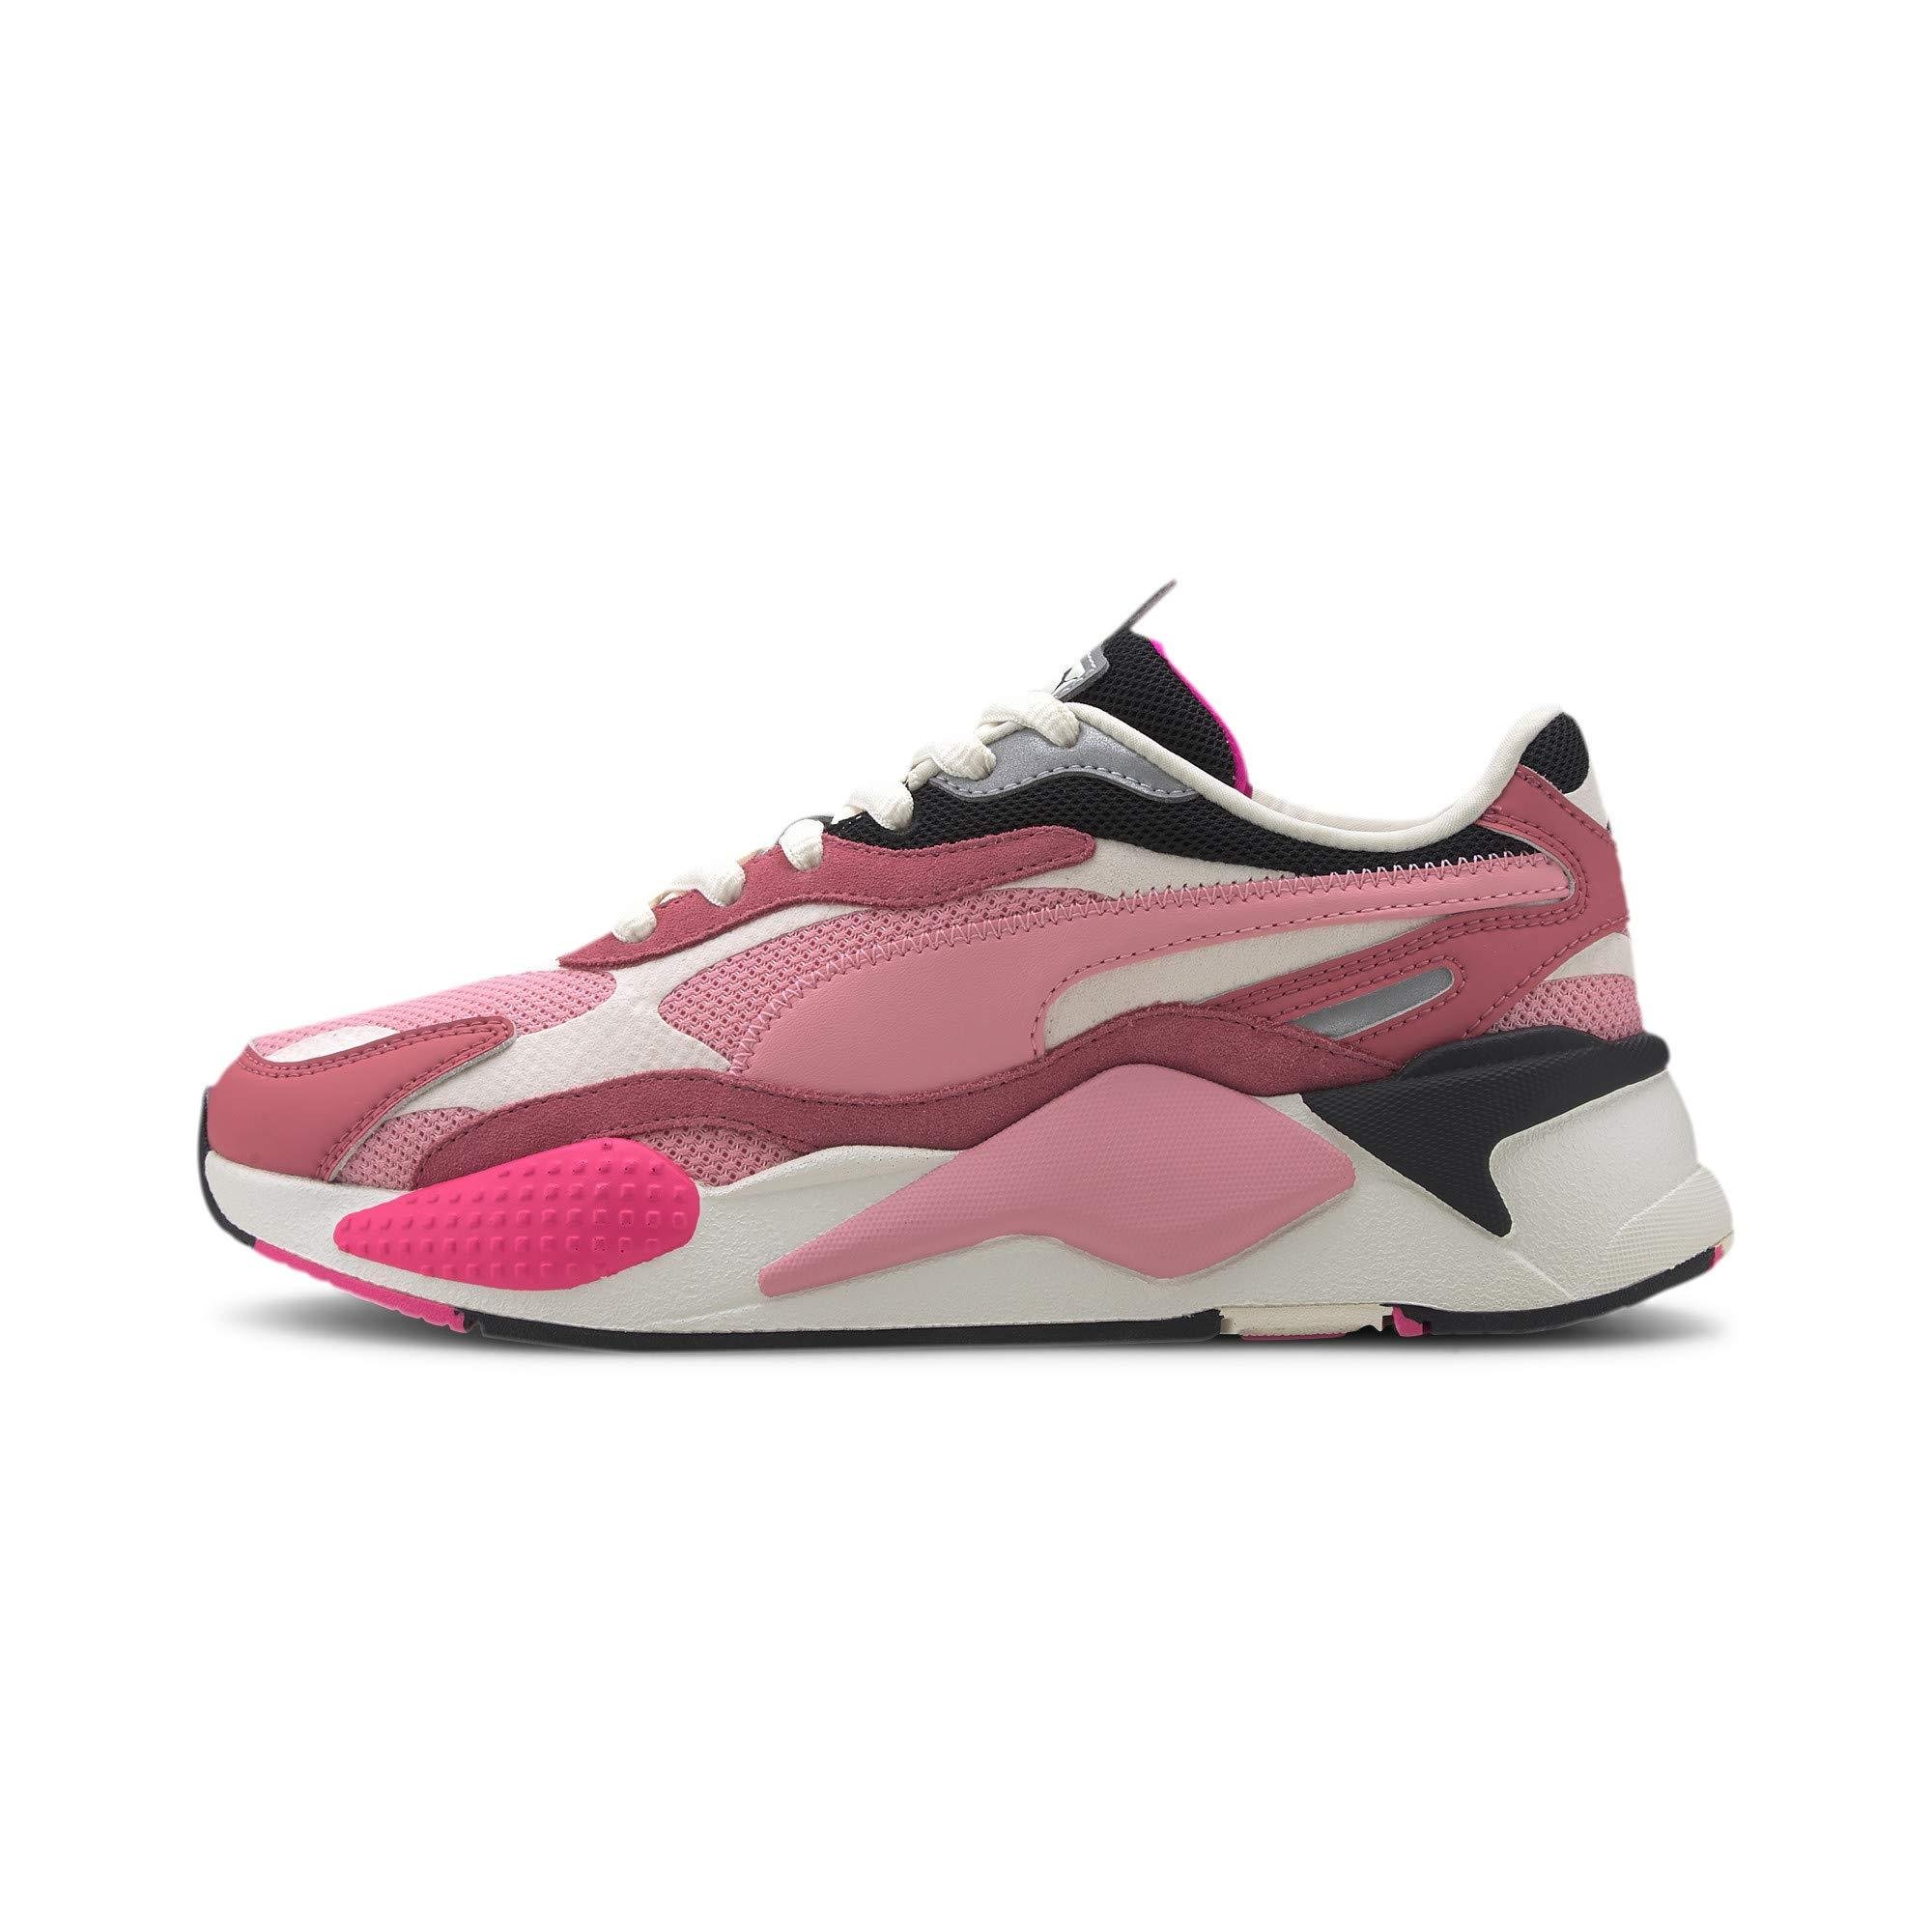 puma sneaker pink